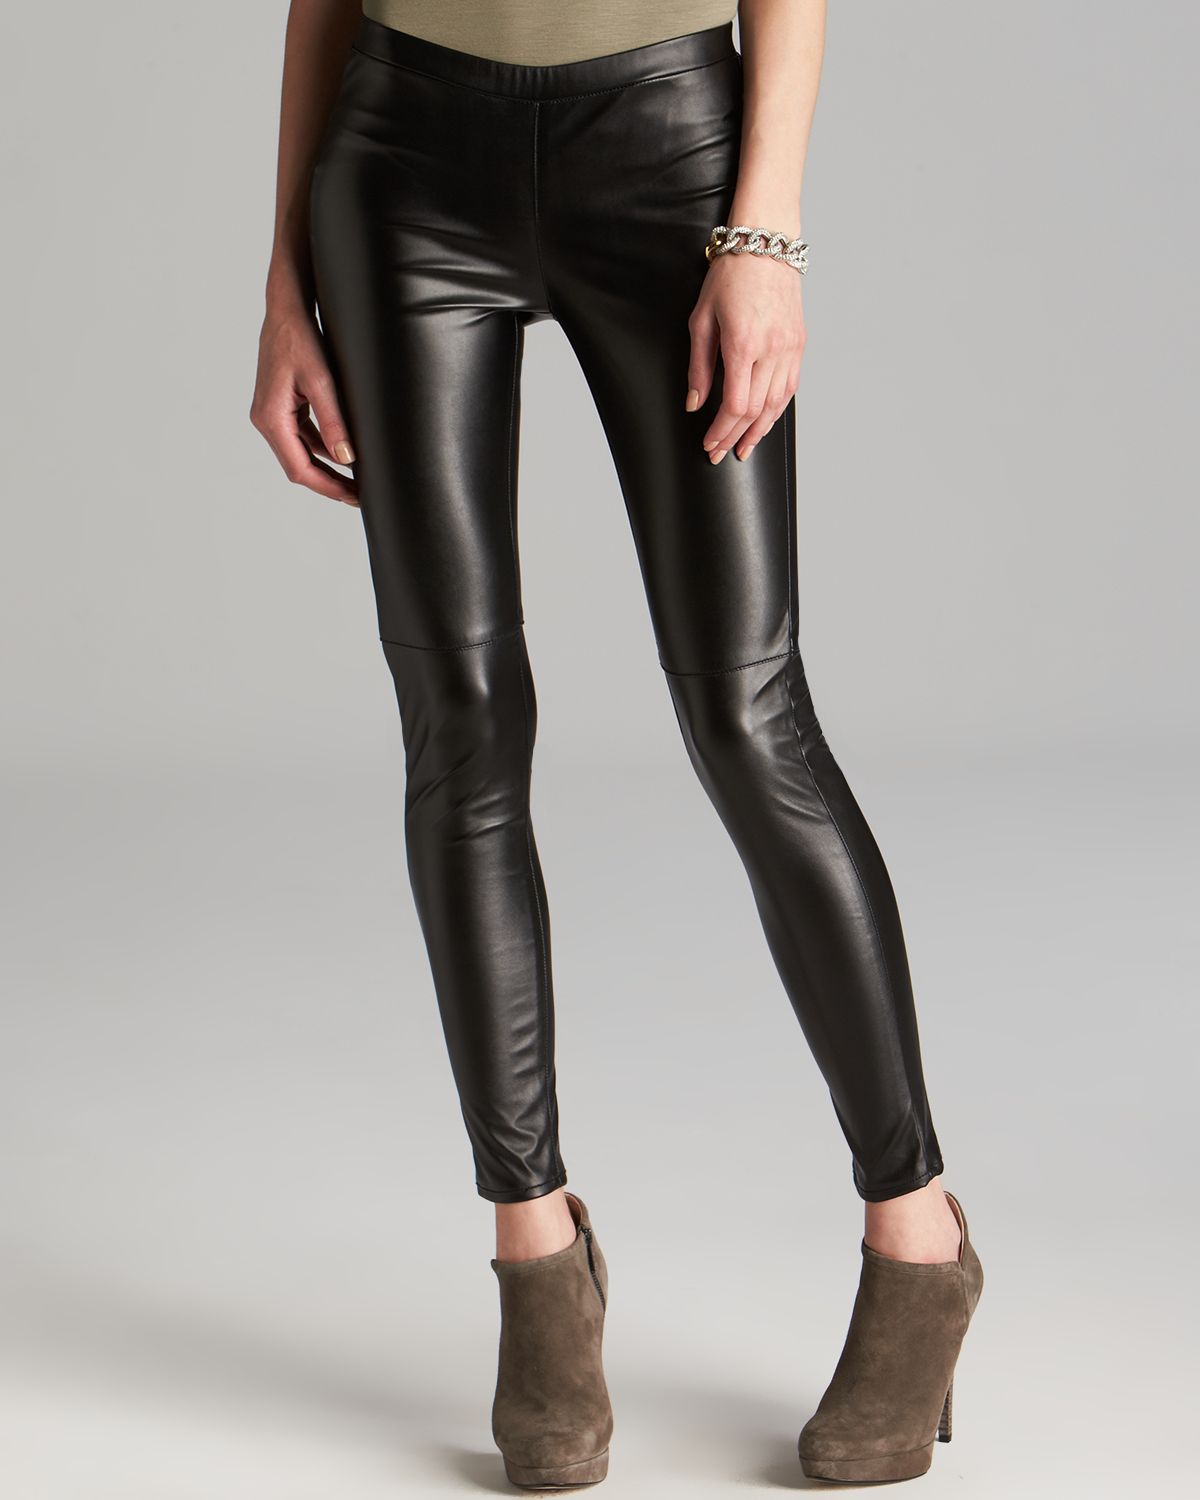 http://cdnd.lystit.com/photos/2013/09/23/michael-by-michael-kors-black-stretch-faux-leather-leggings-product-1-13657827-738683099.jpeg